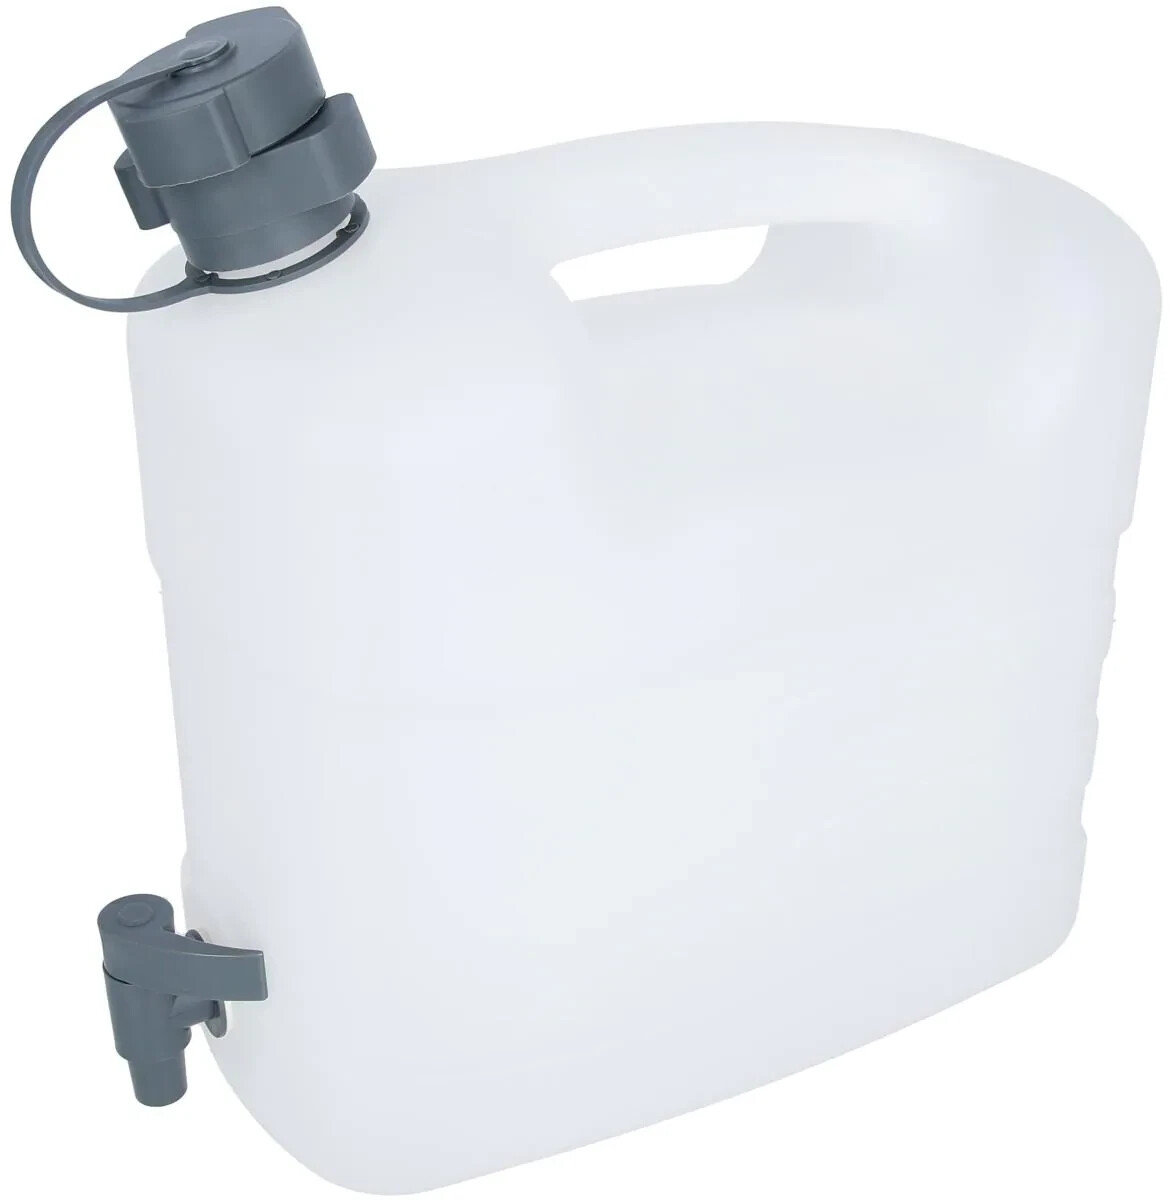 Pressol Wasserkanister mit Ablasshahn weiß 10L ab 16,10